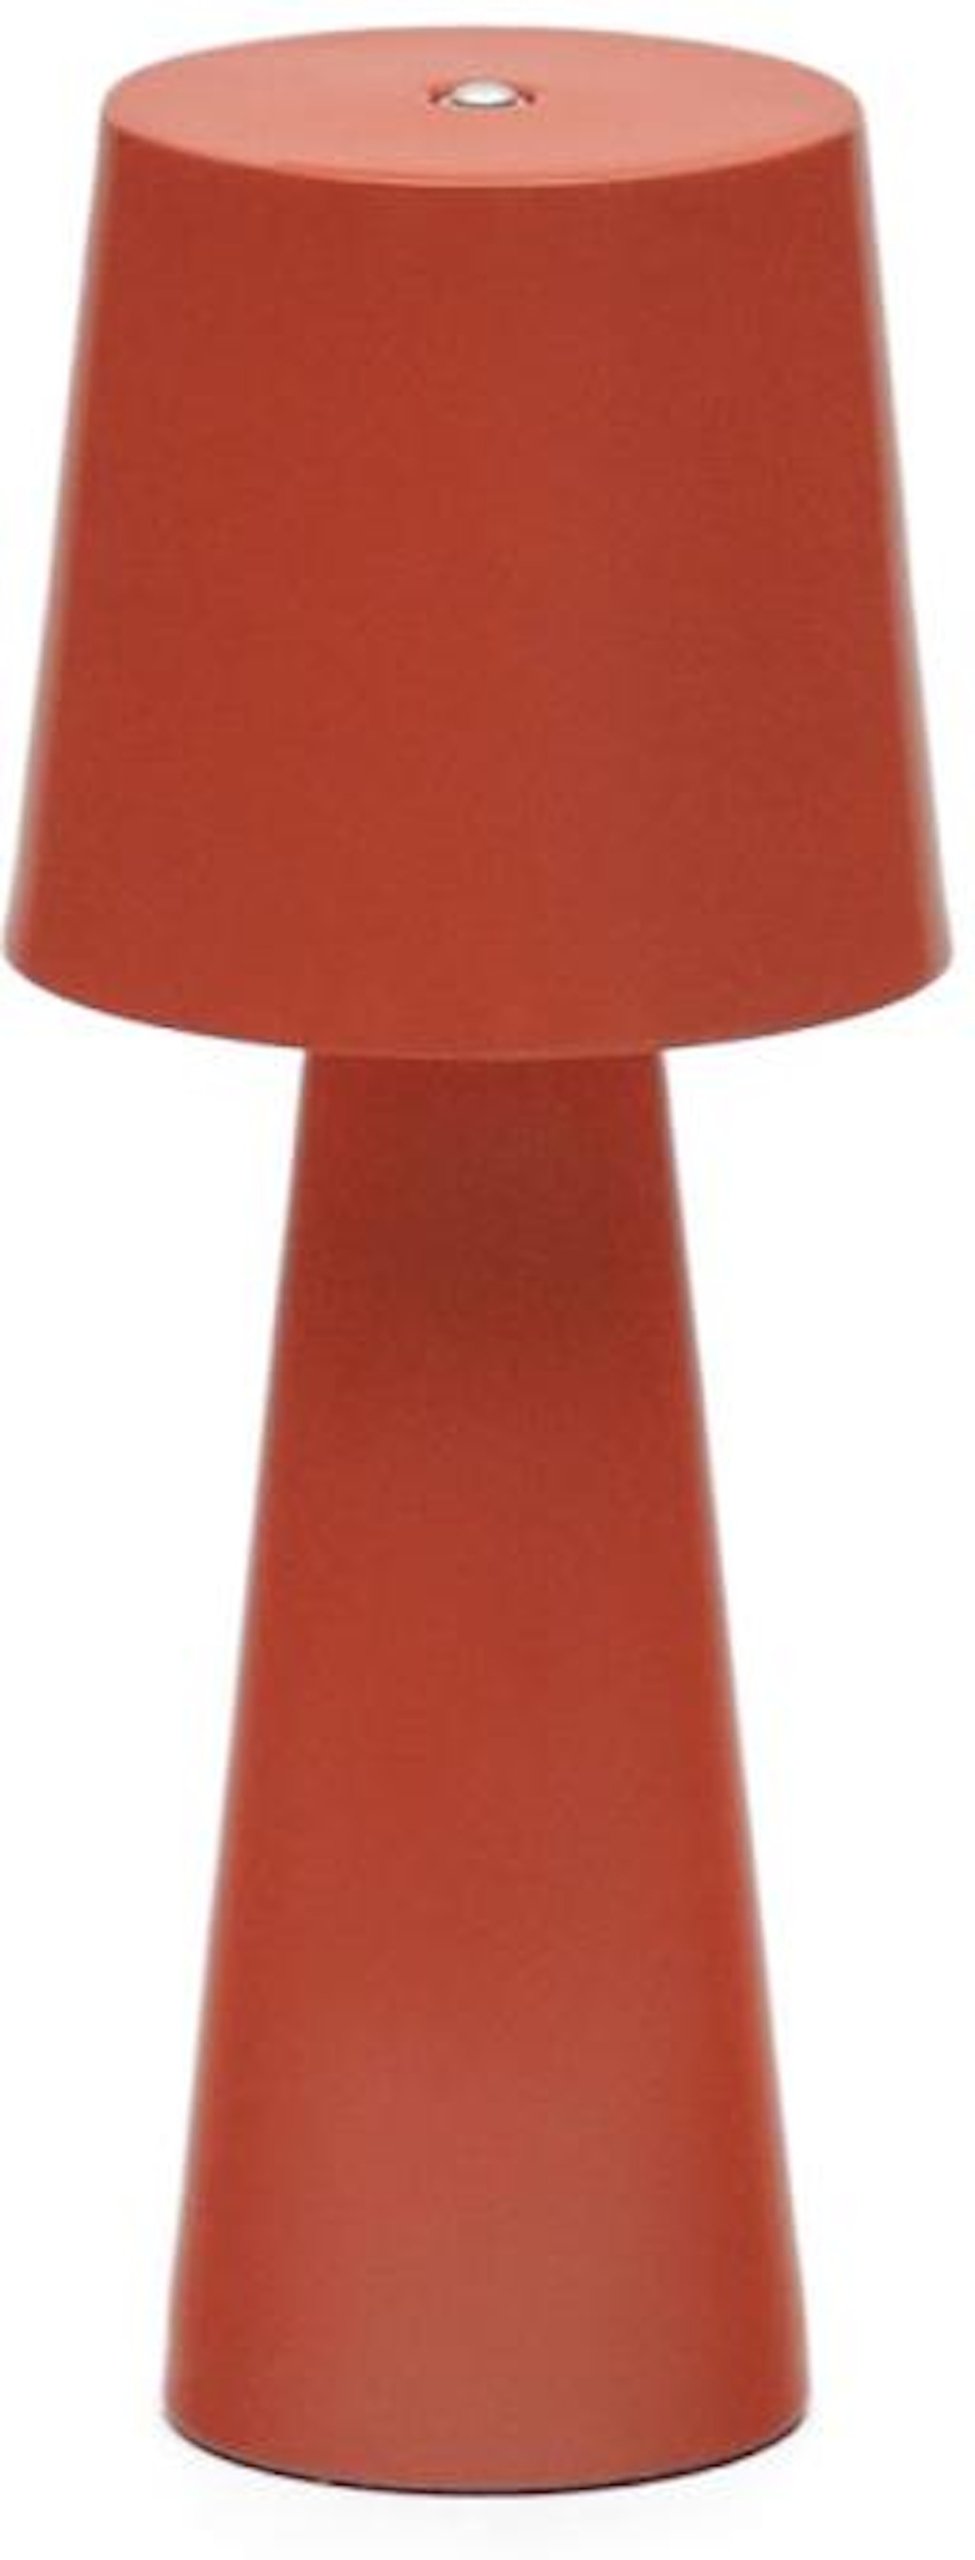 LAFORMA Arenys lille bordlampe med rødmalet finish